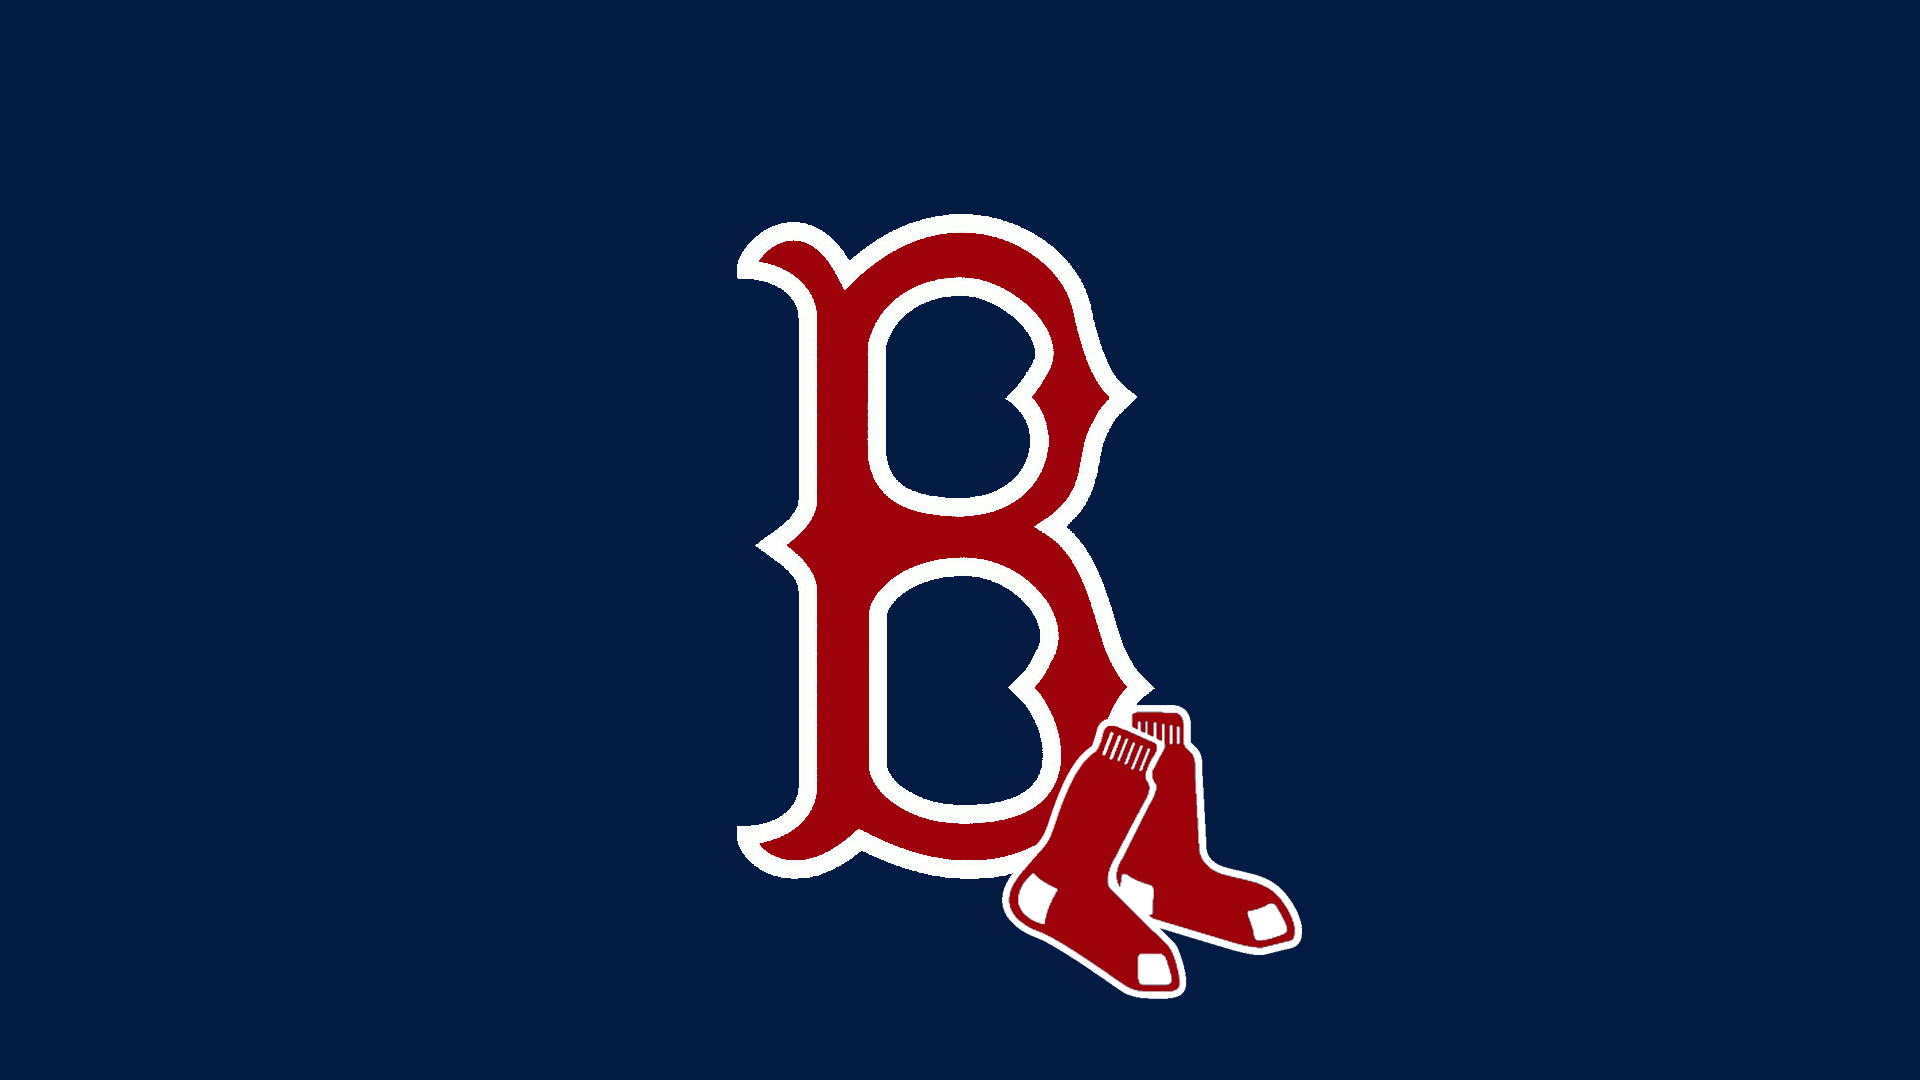 Vibrant Boston Red Sox desktop wallpaper flaunting team spirit and sports enthusiasm.